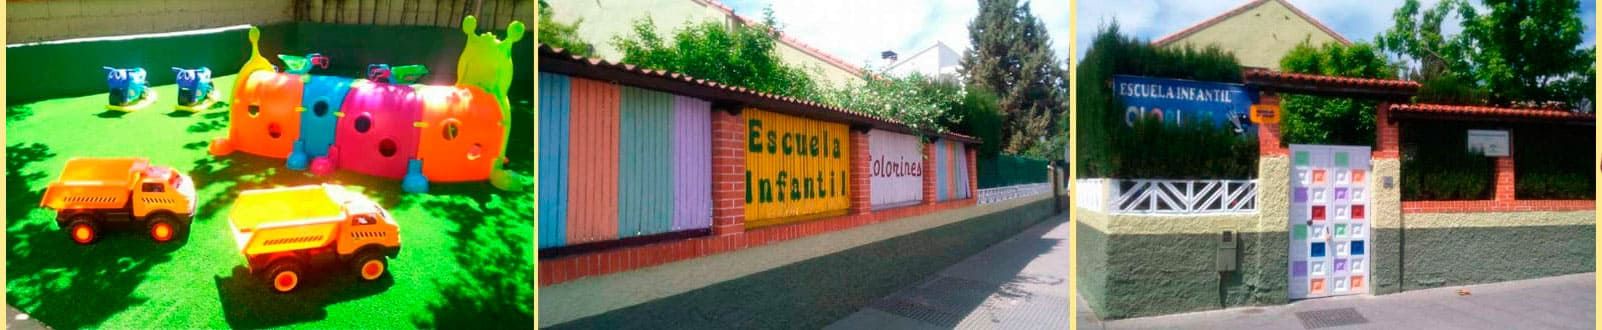 Escuela Infantil Colorines fachada jardín infantil